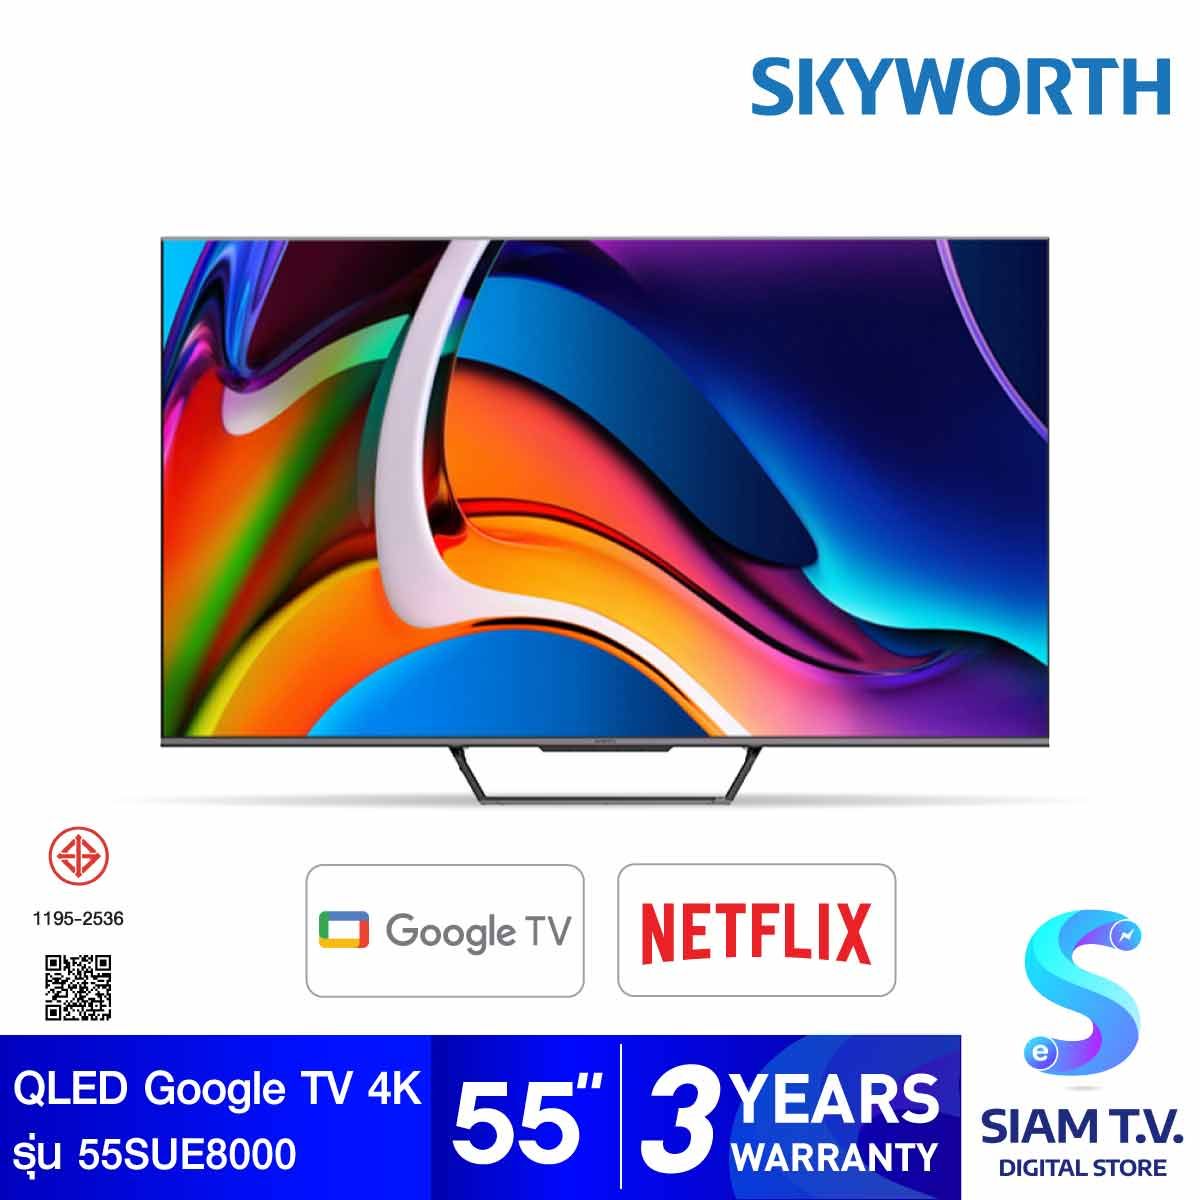 SKYWORTH QLED Google TV 4K  รุ่น 55SUE8000 Google TV ขนาด 55 นิ้ว